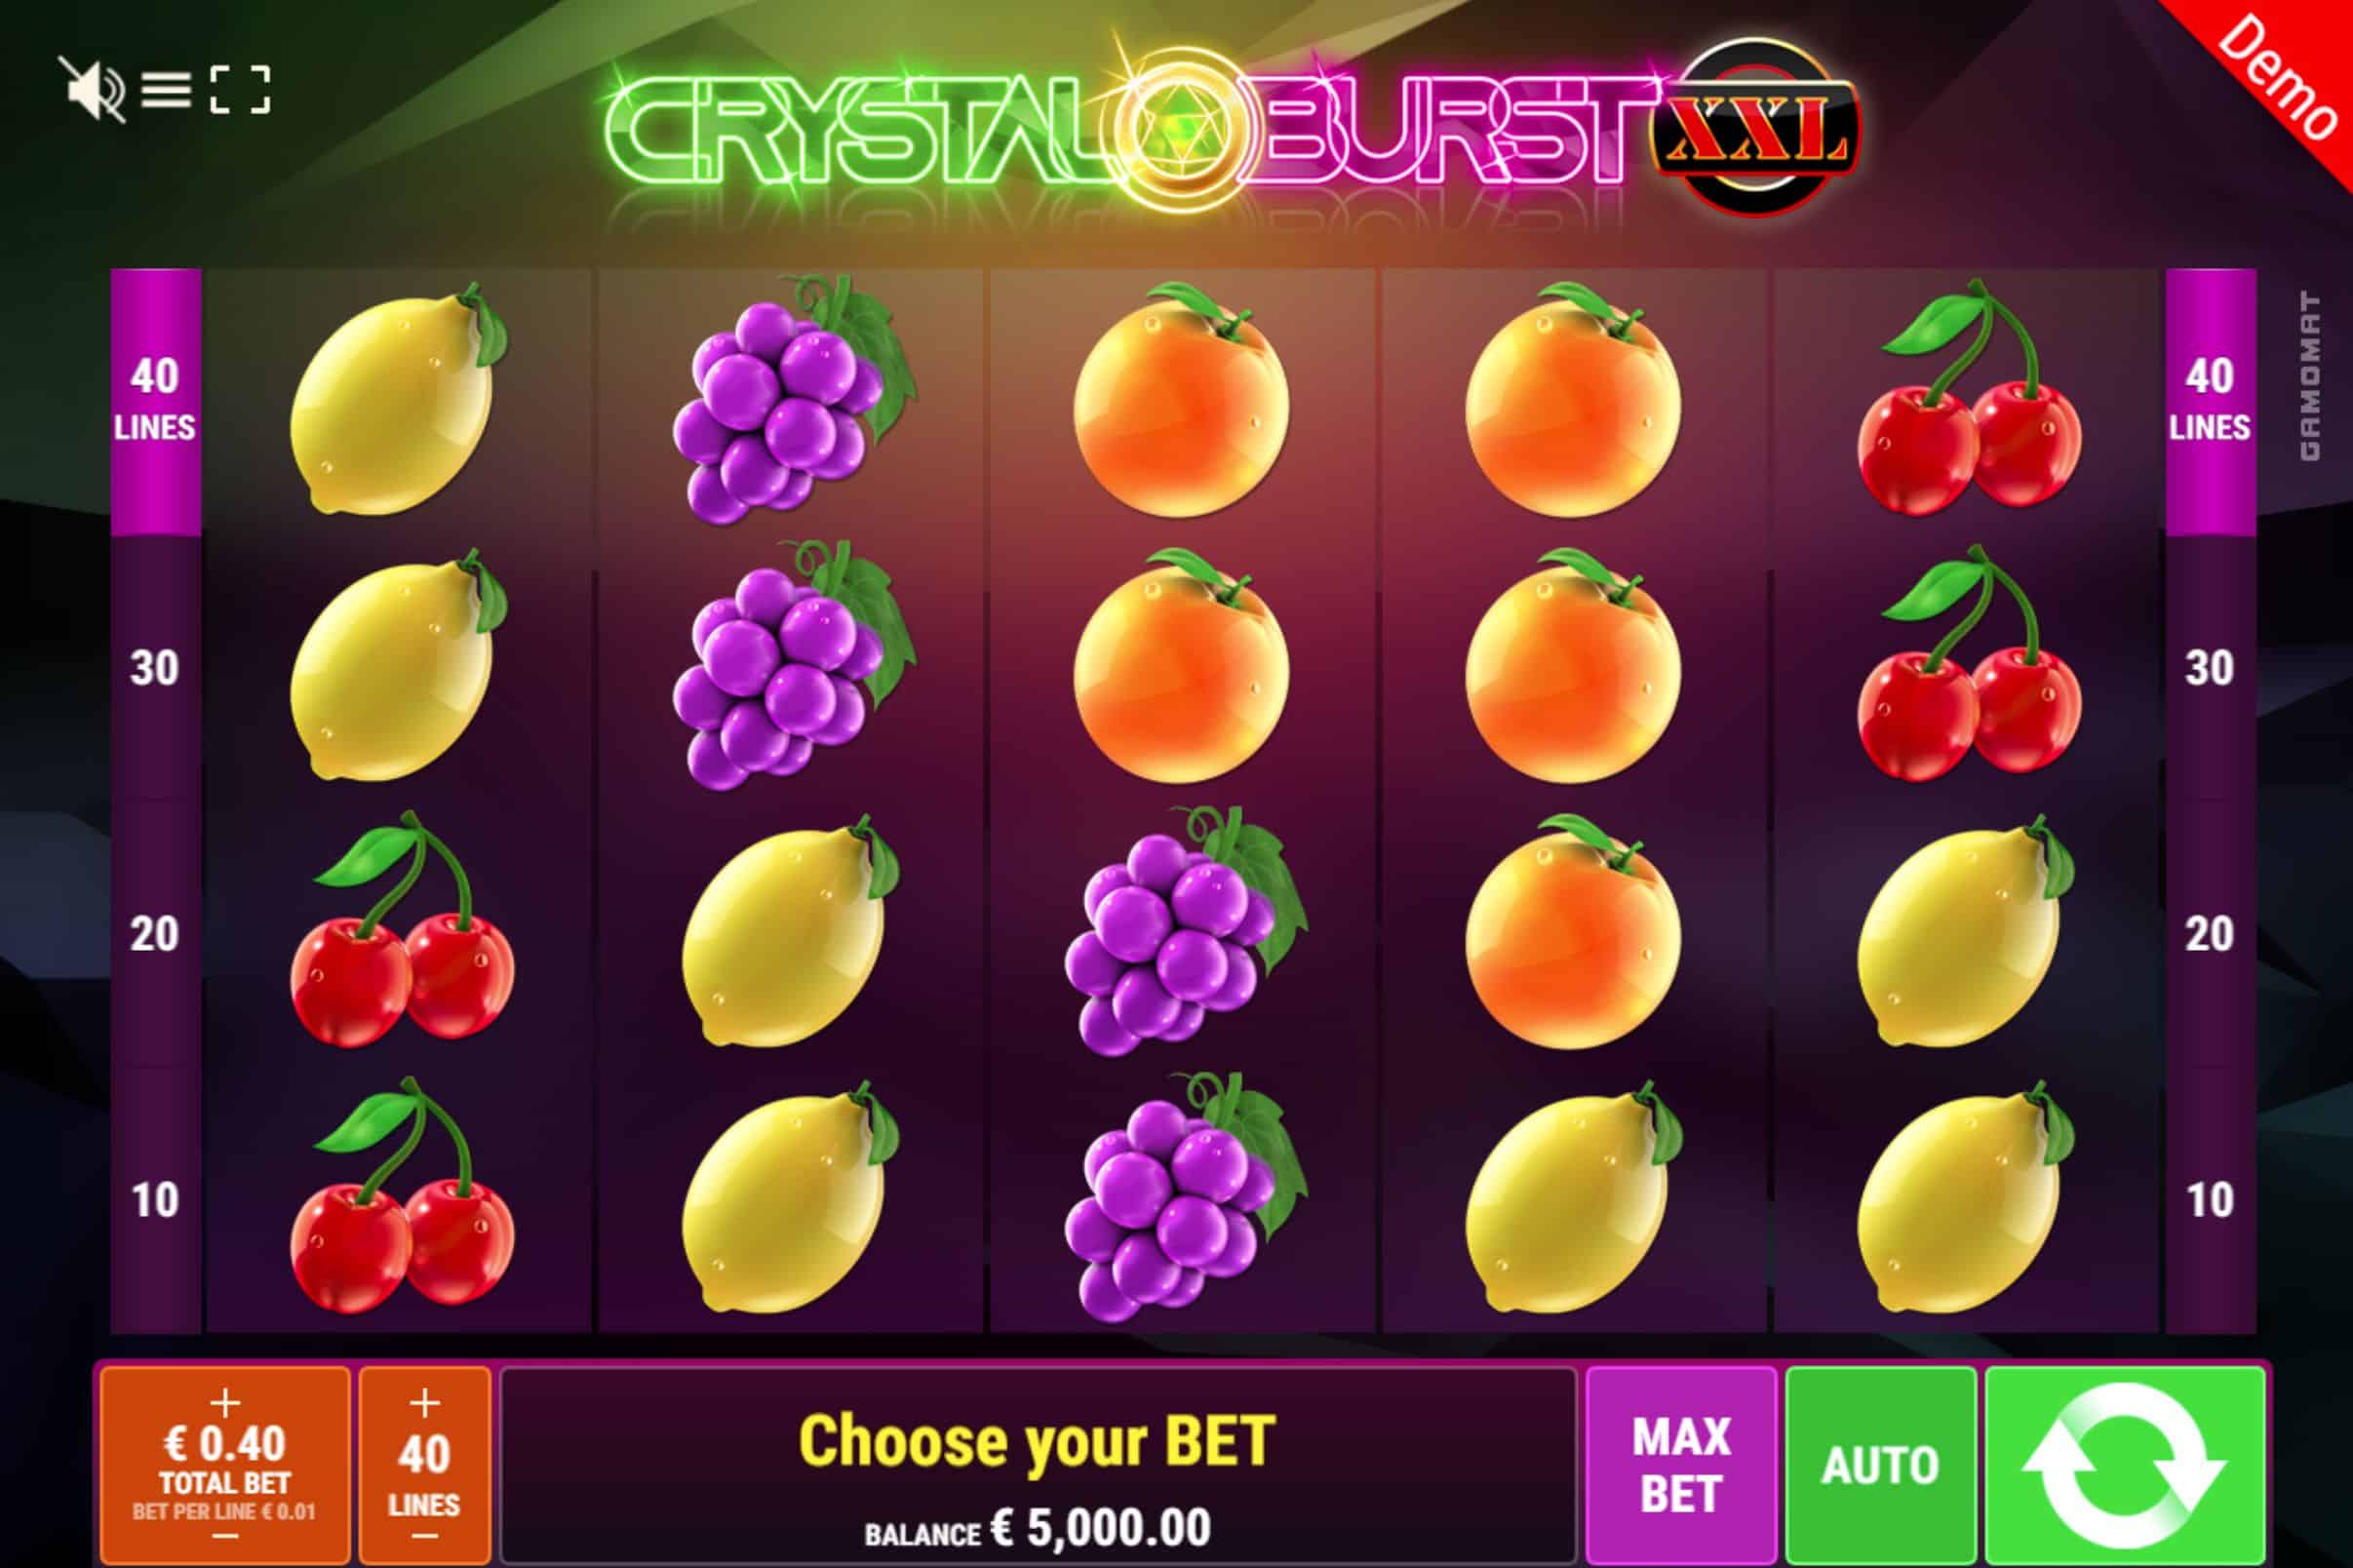 Crystal Burst XXL Slot Game Free Play at Casino Ireland 01